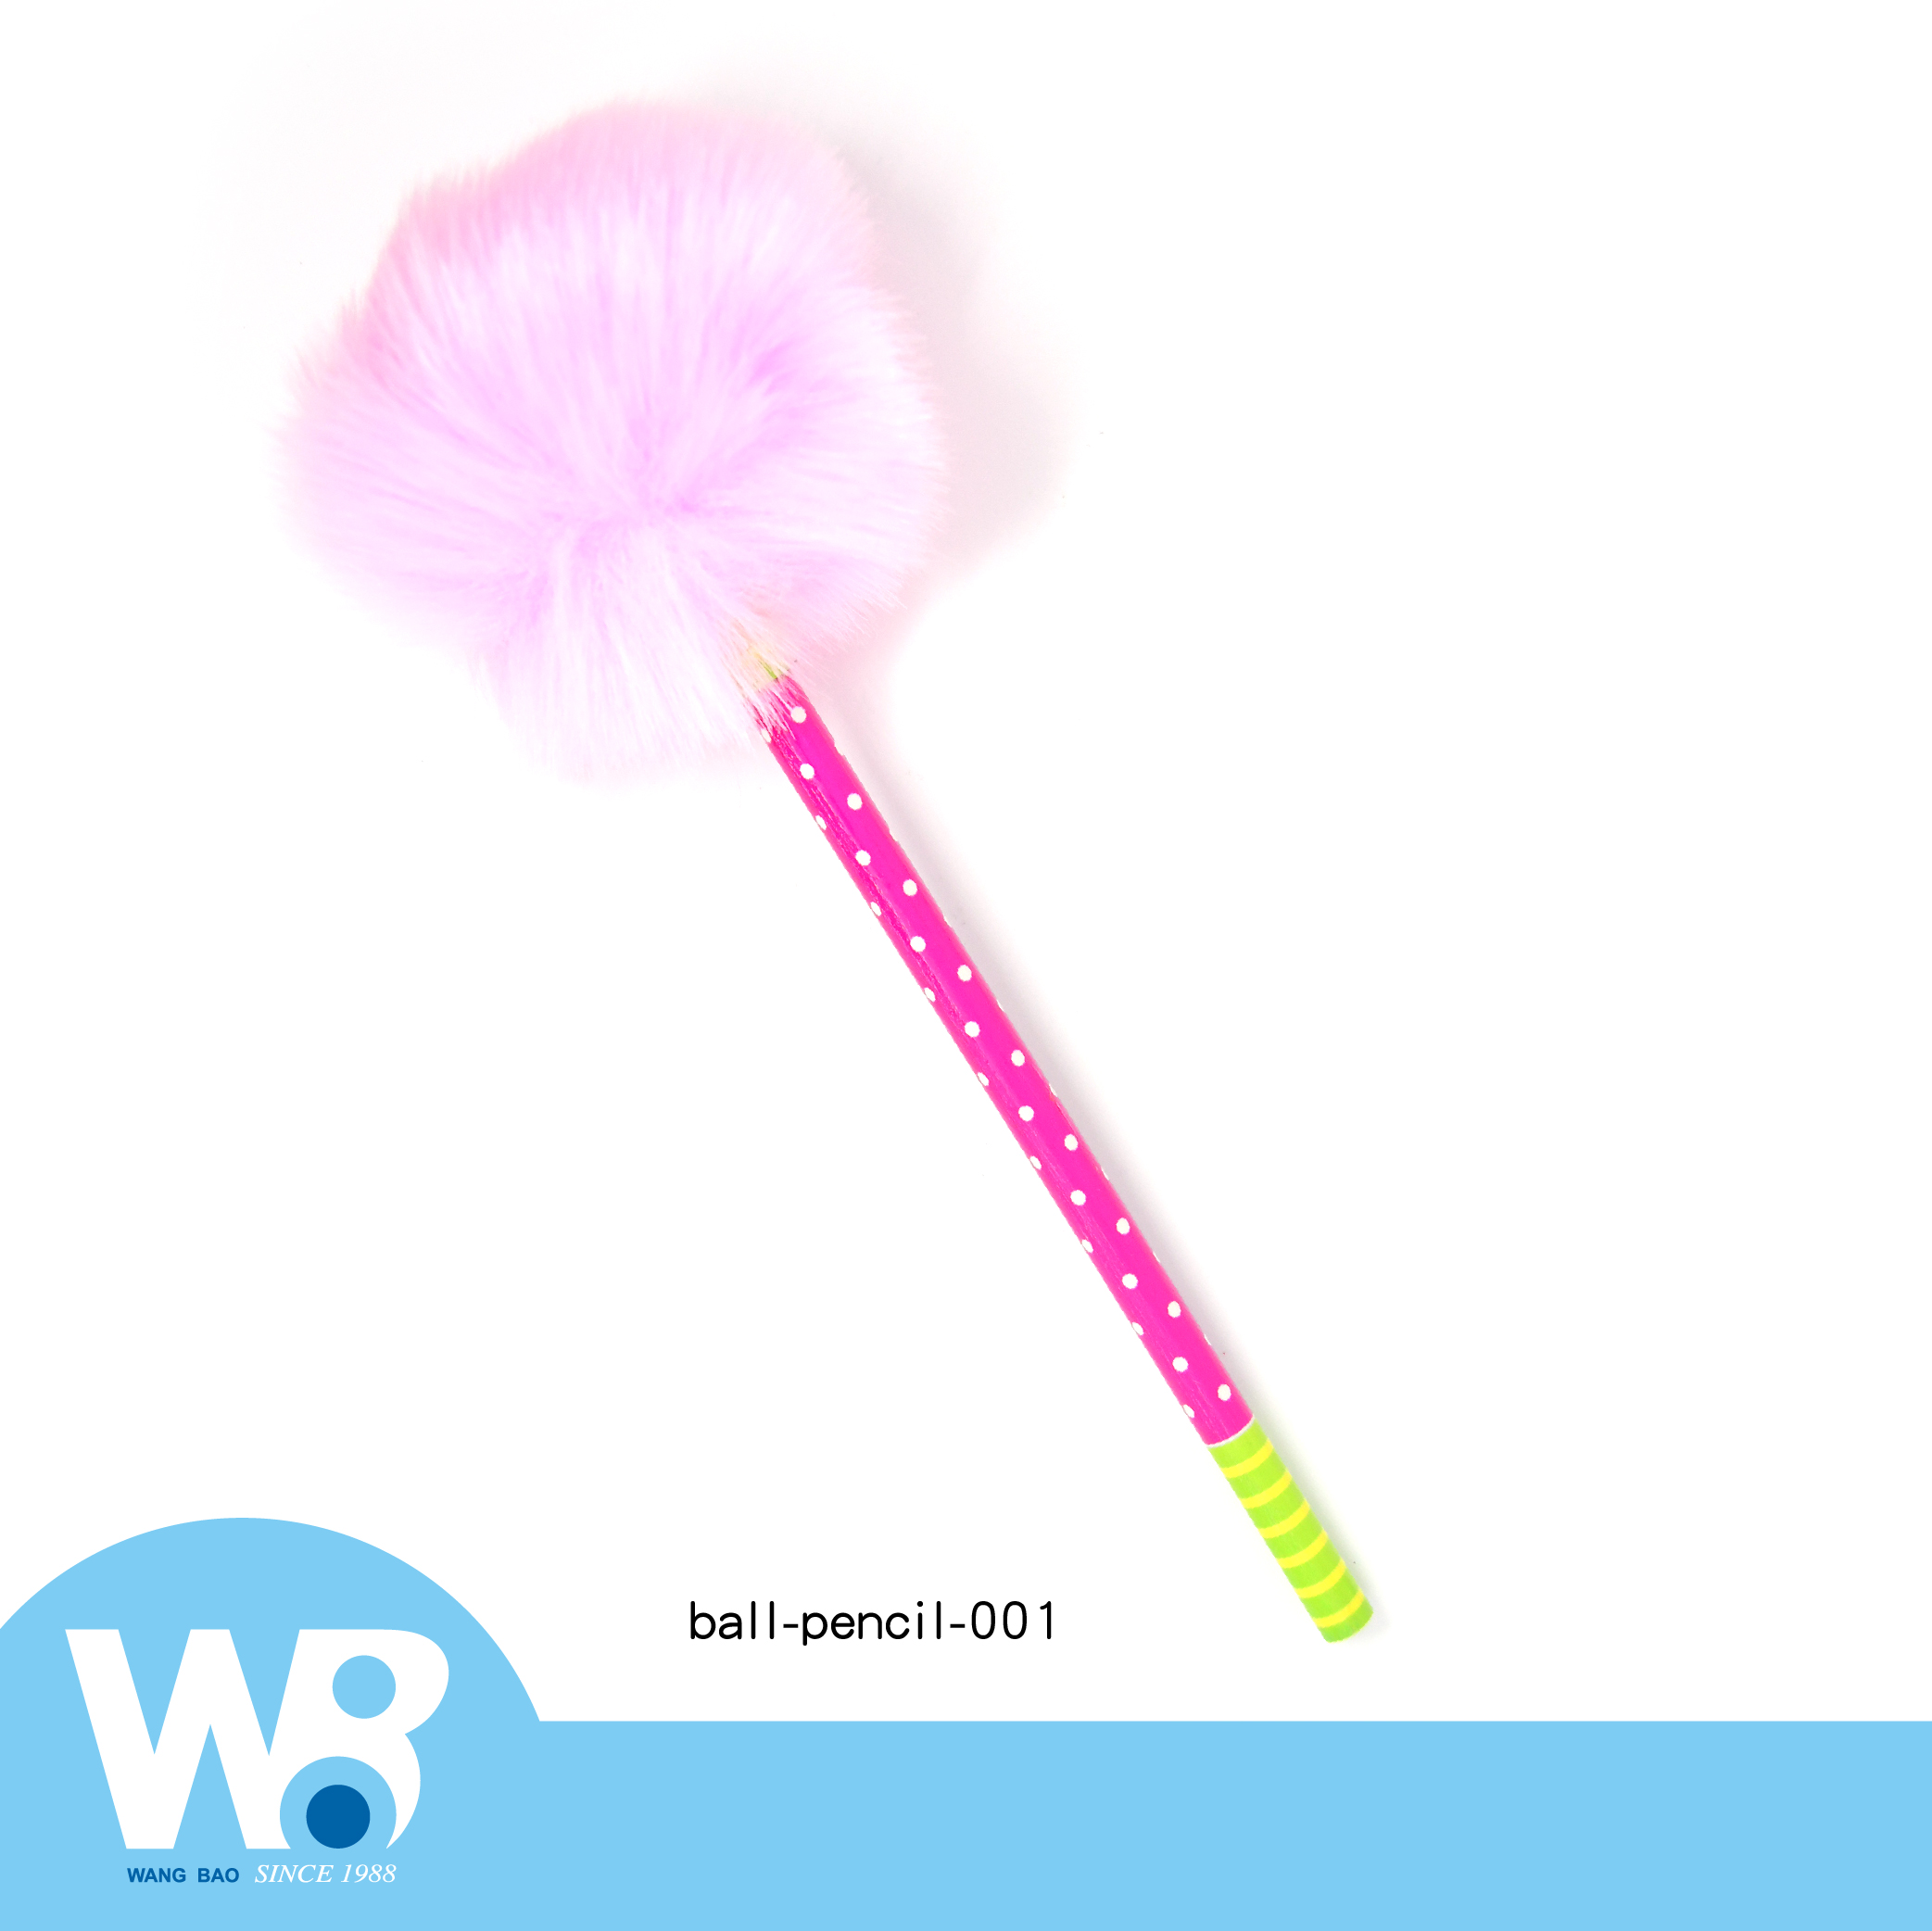 OEM-Hairball modeling pencil